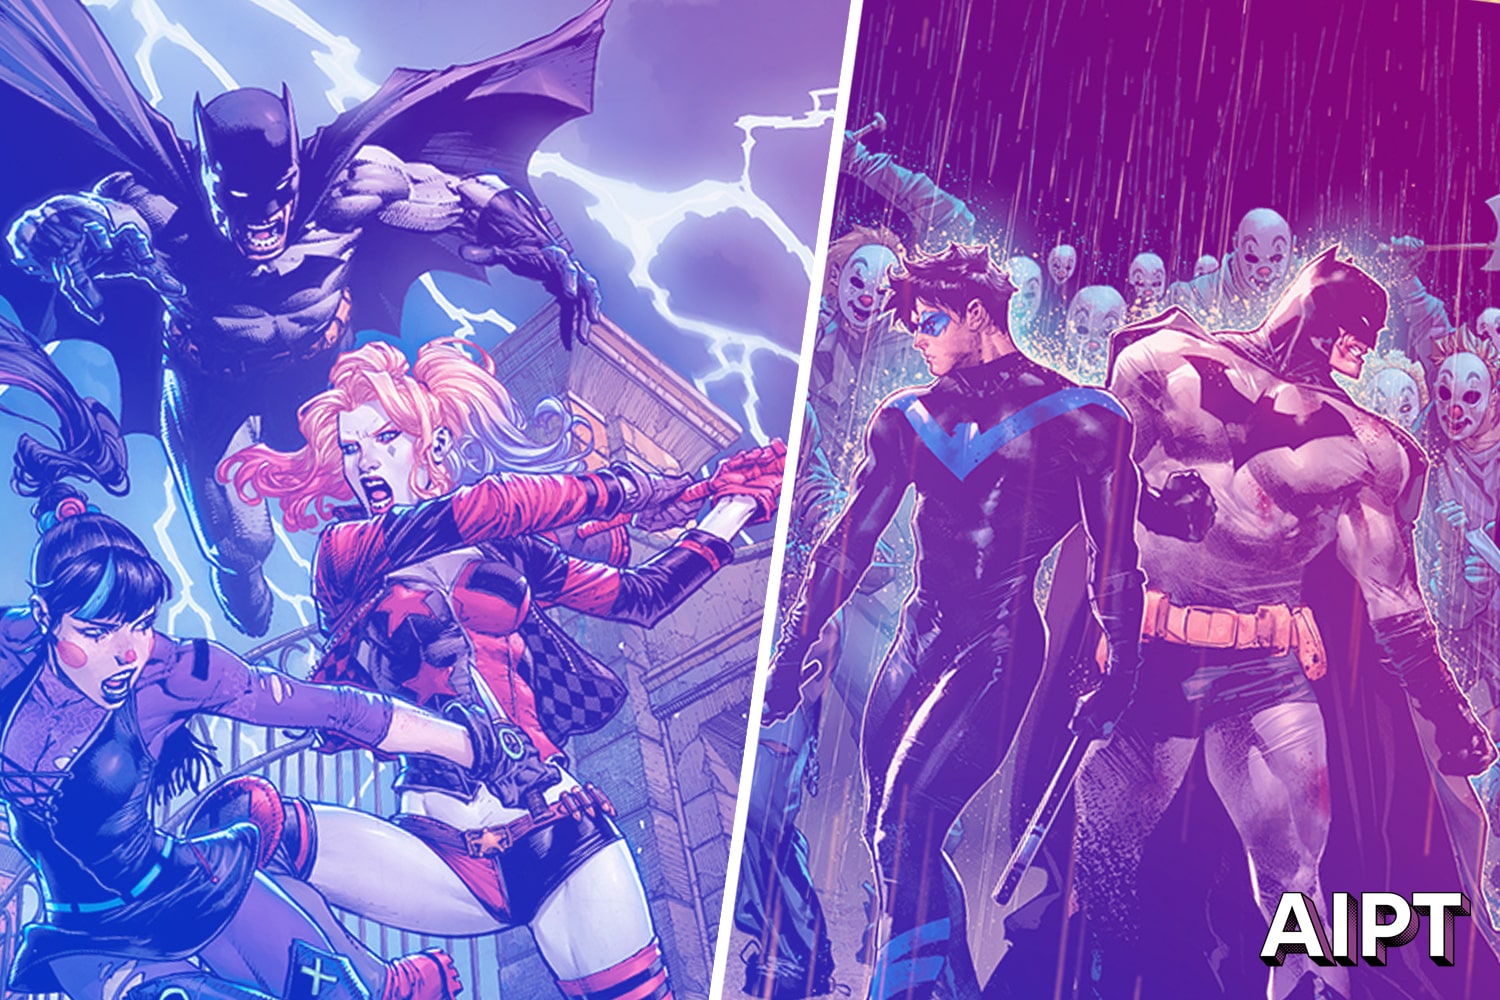 Batman reuniting with the original Robin aka Nightwing in 'The Joker War' this September